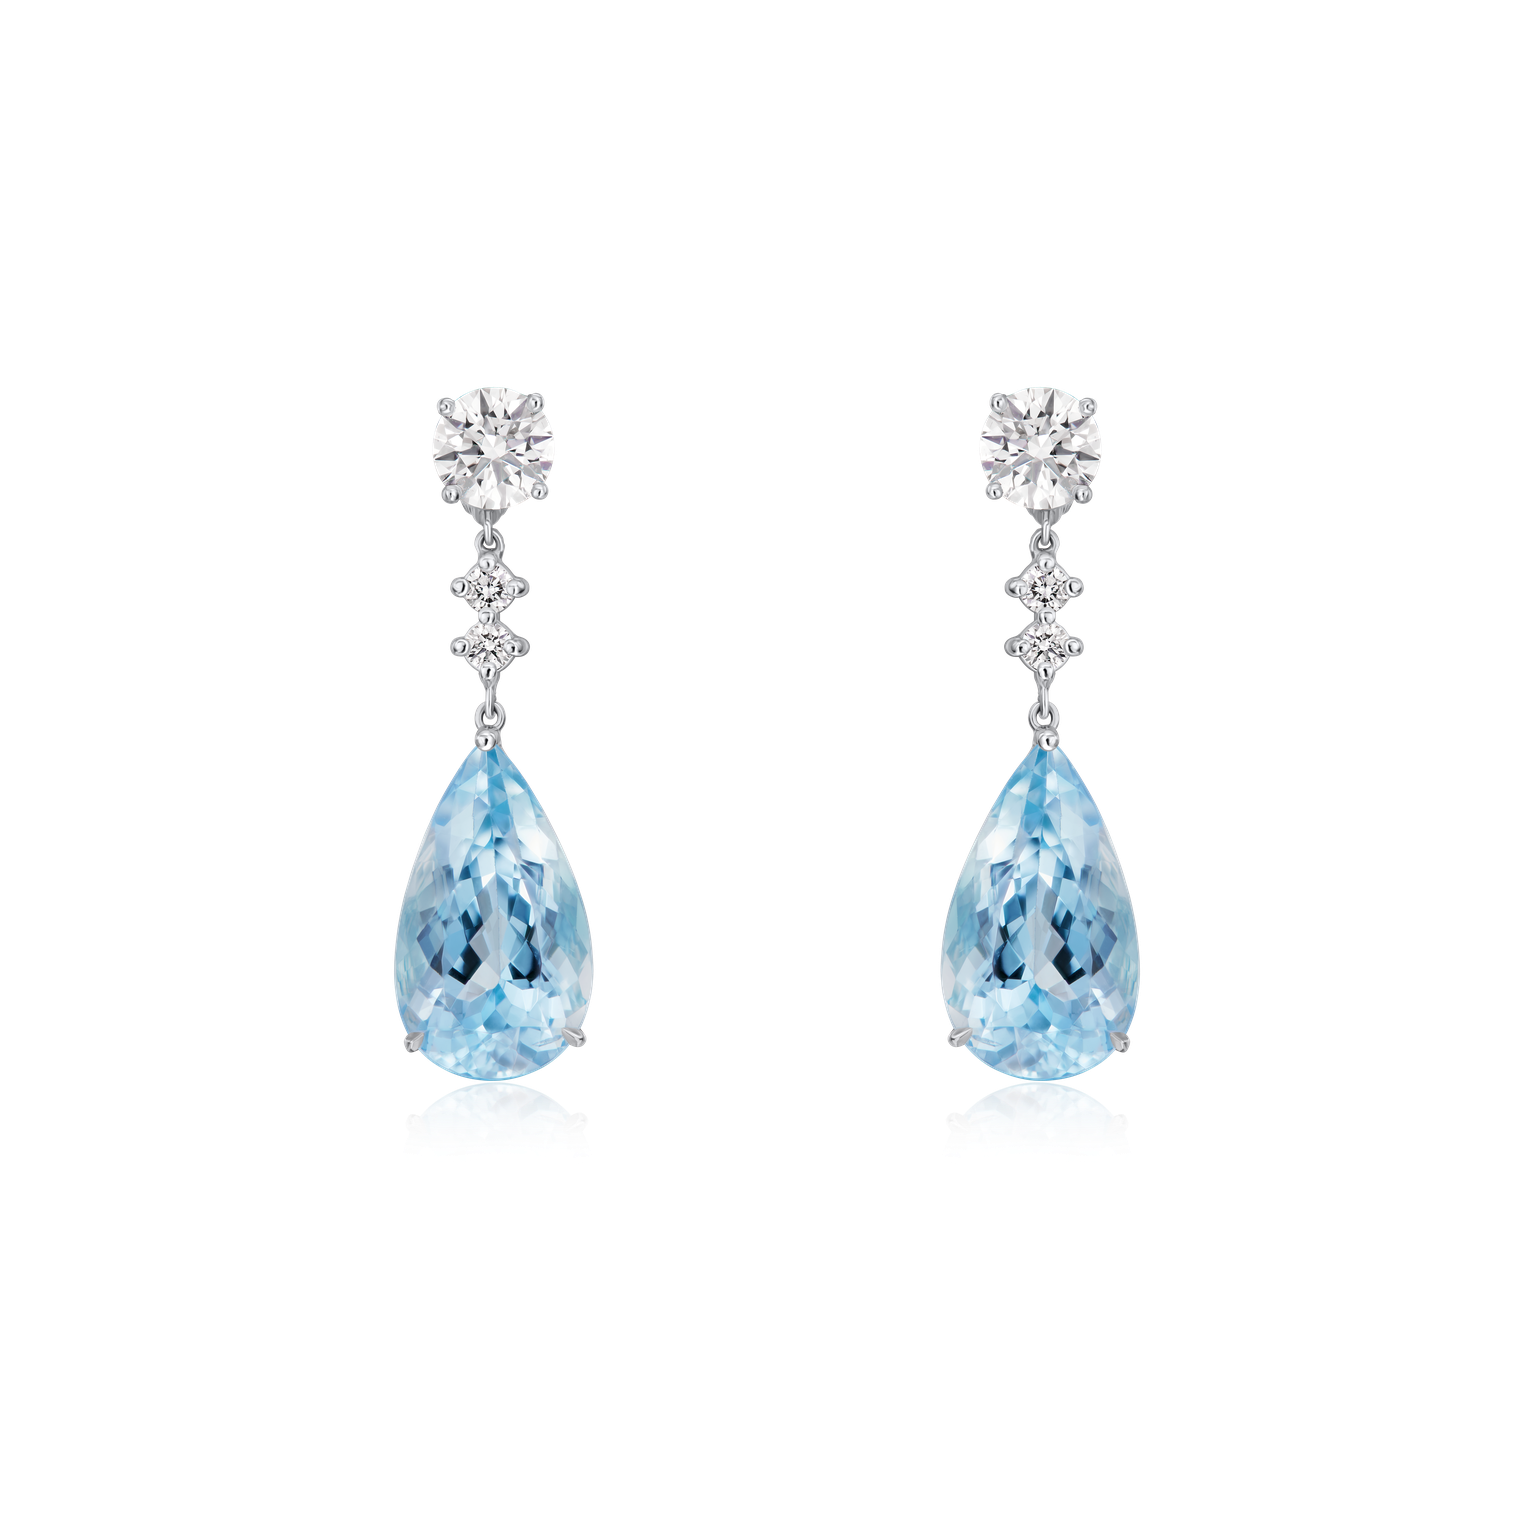 7.76cts Aquamarine and Diamond Drop Earrings